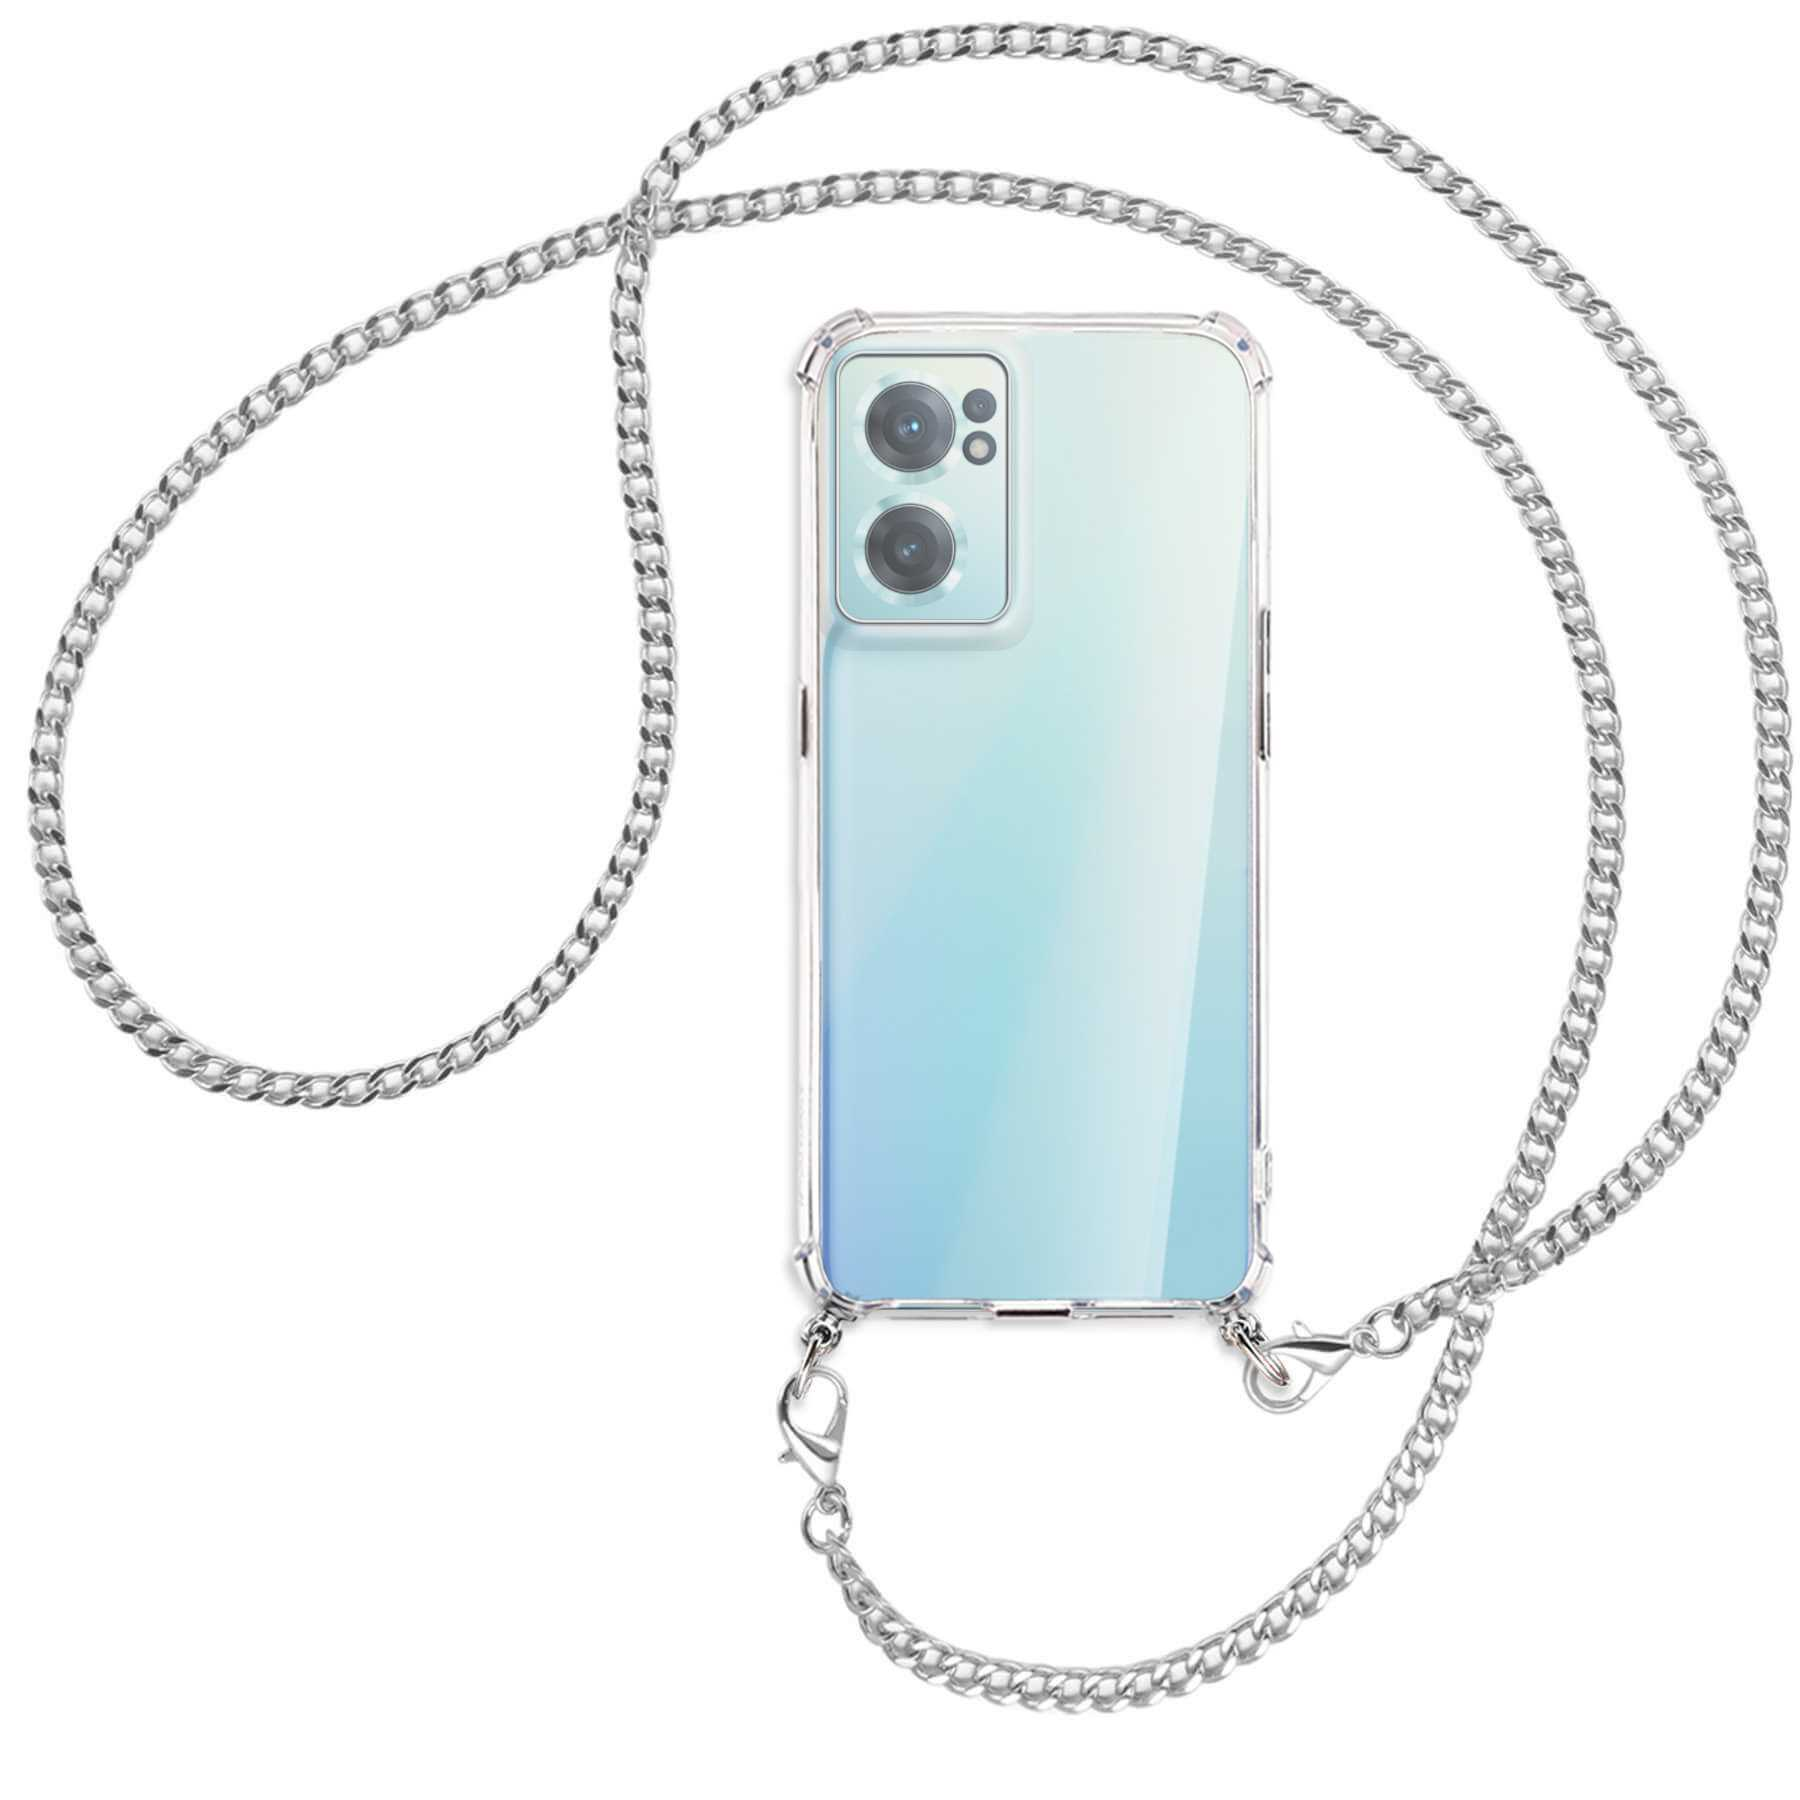 5G, (silber) Nord ENERGY OnePlus, Backcover, mit Kette MTB 2 CE Umhänge-Hülle Metallkette, MORE